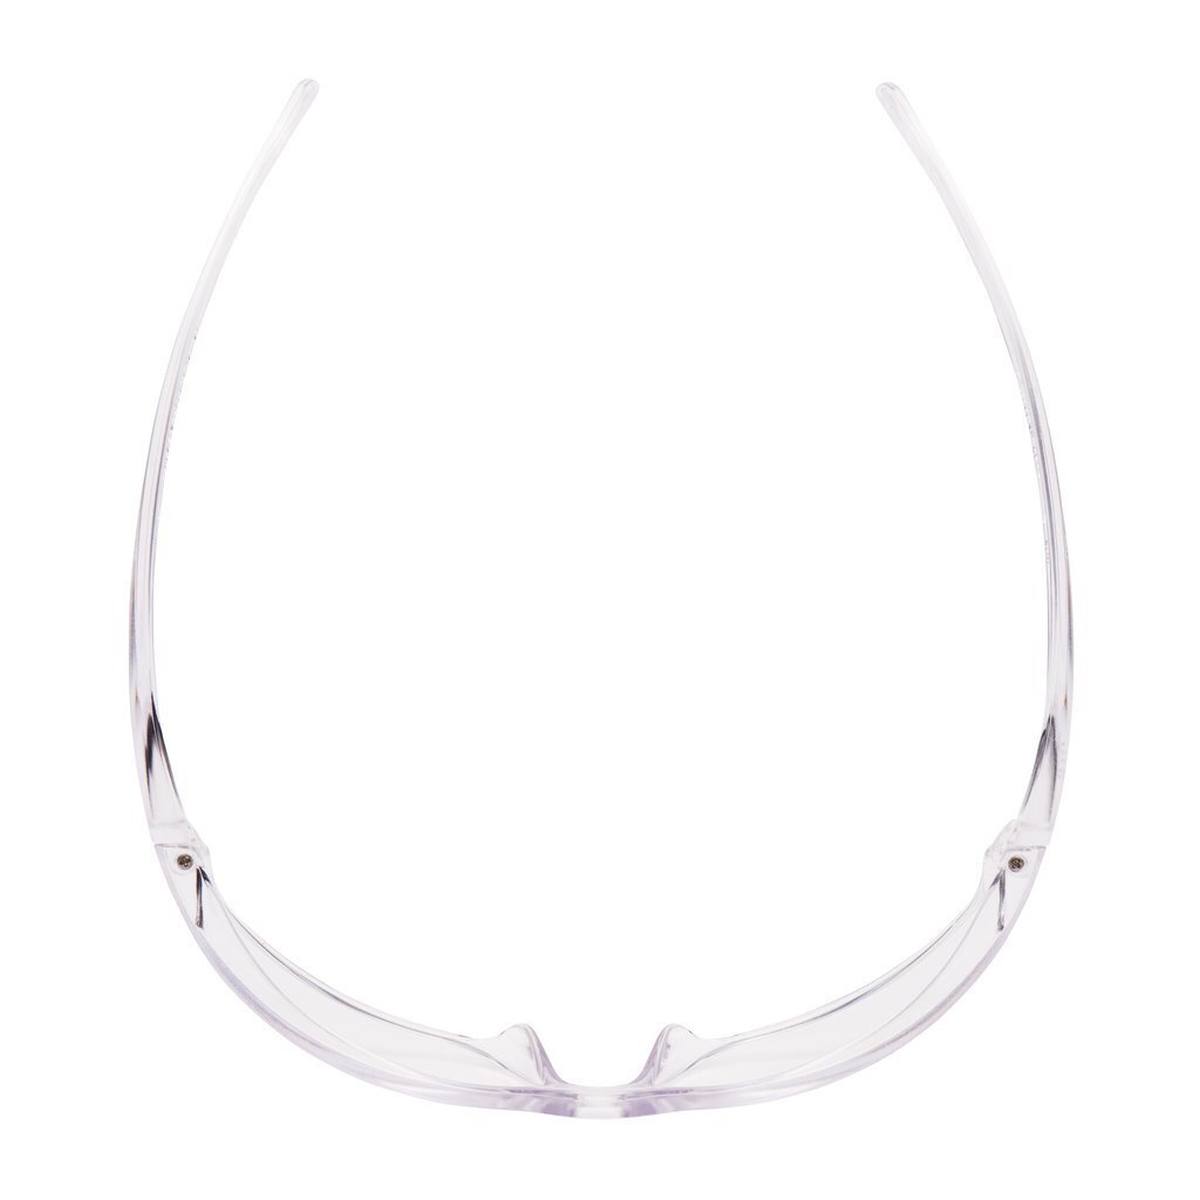 3M Safety goggles "Virtua" AP transparent AP/AS/UV